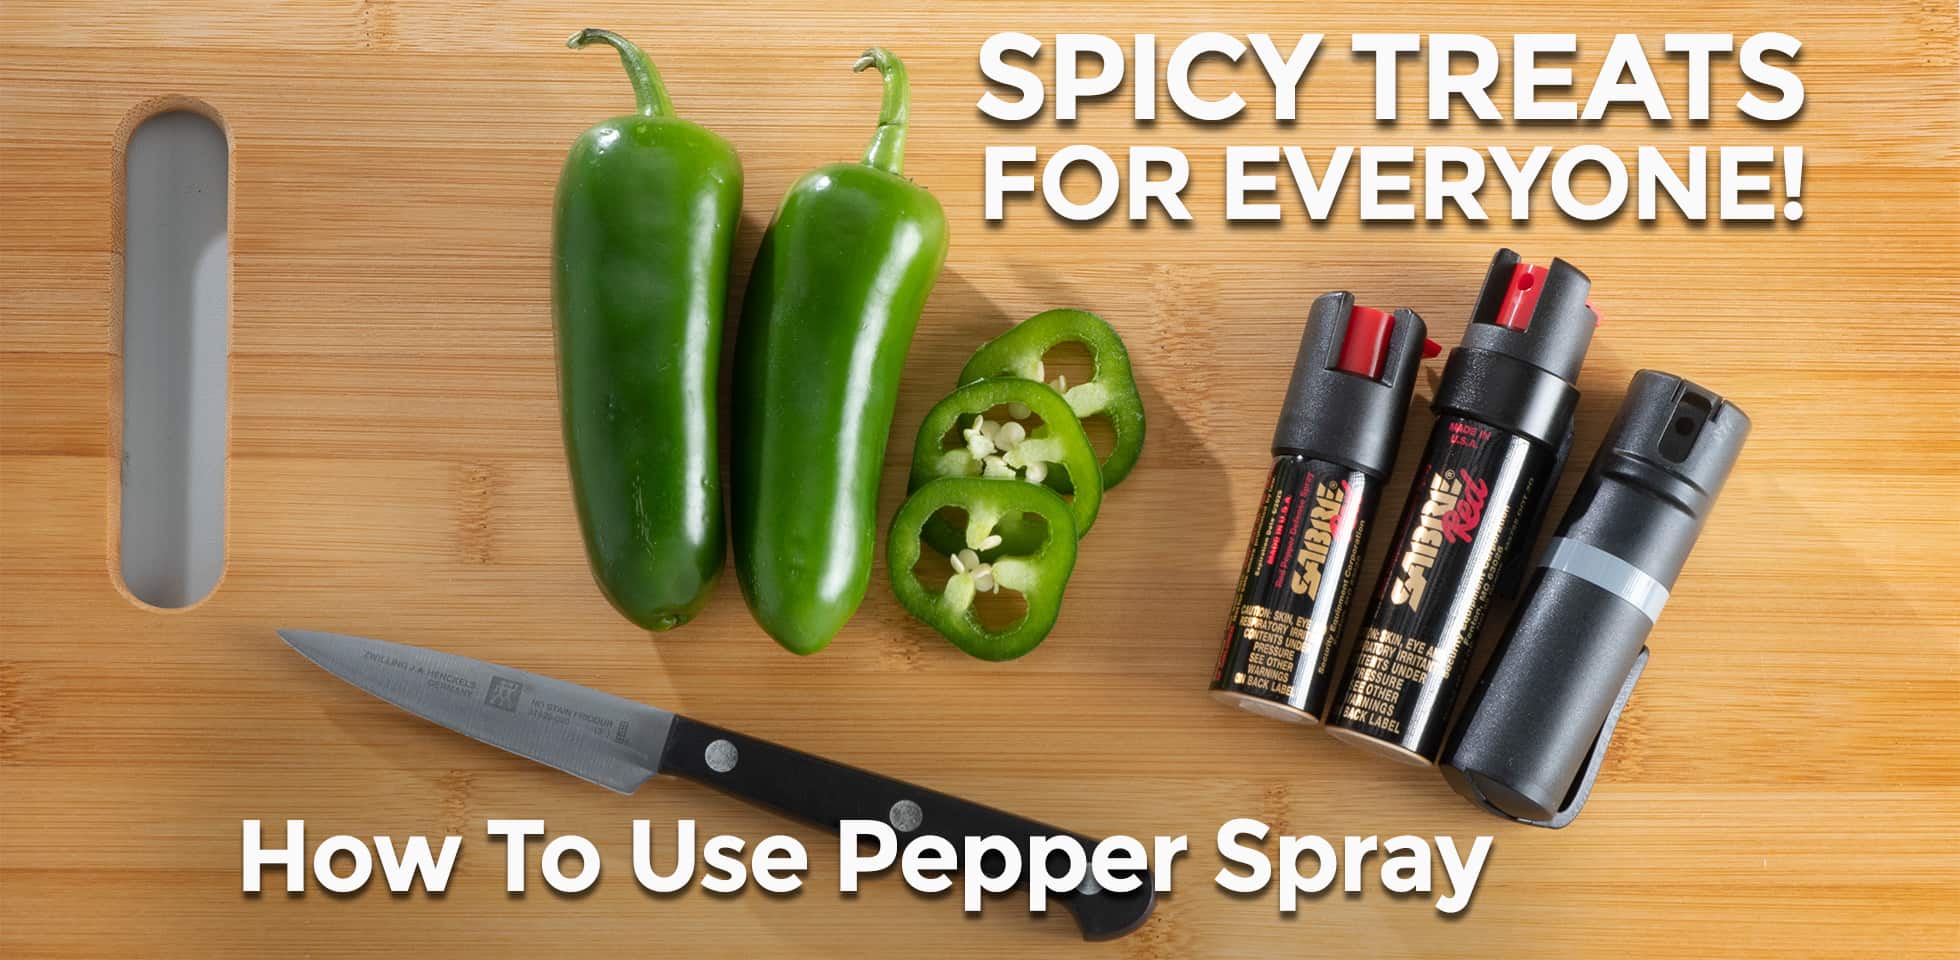 Travel Tip Tuesday: Pepper Spray - Glow As You Go